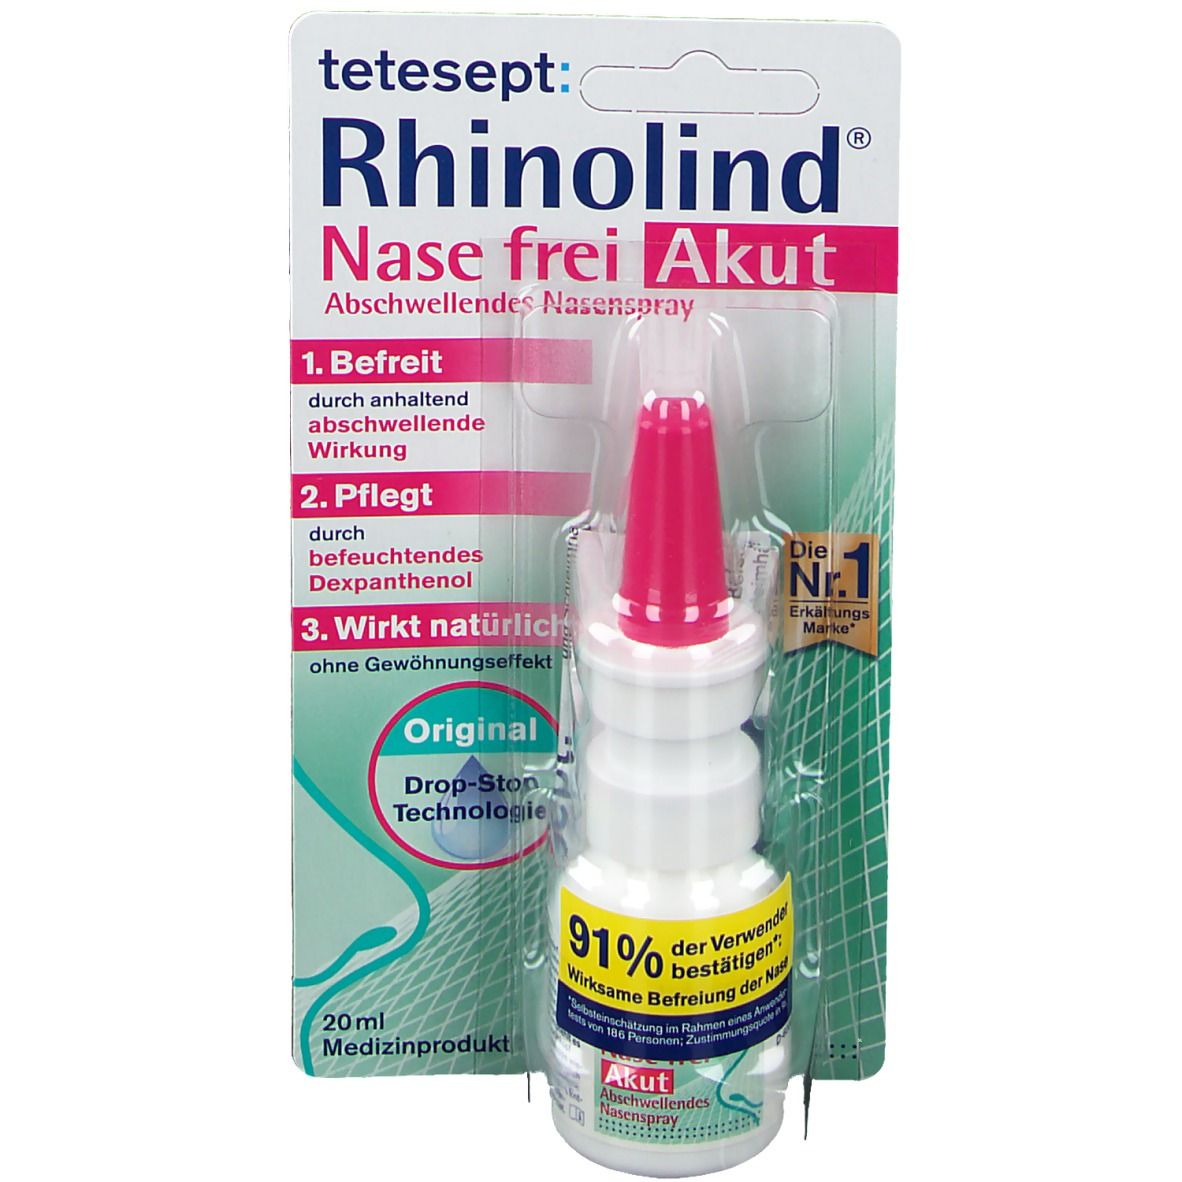 tetesept® rhinolind decongestant nasal spray